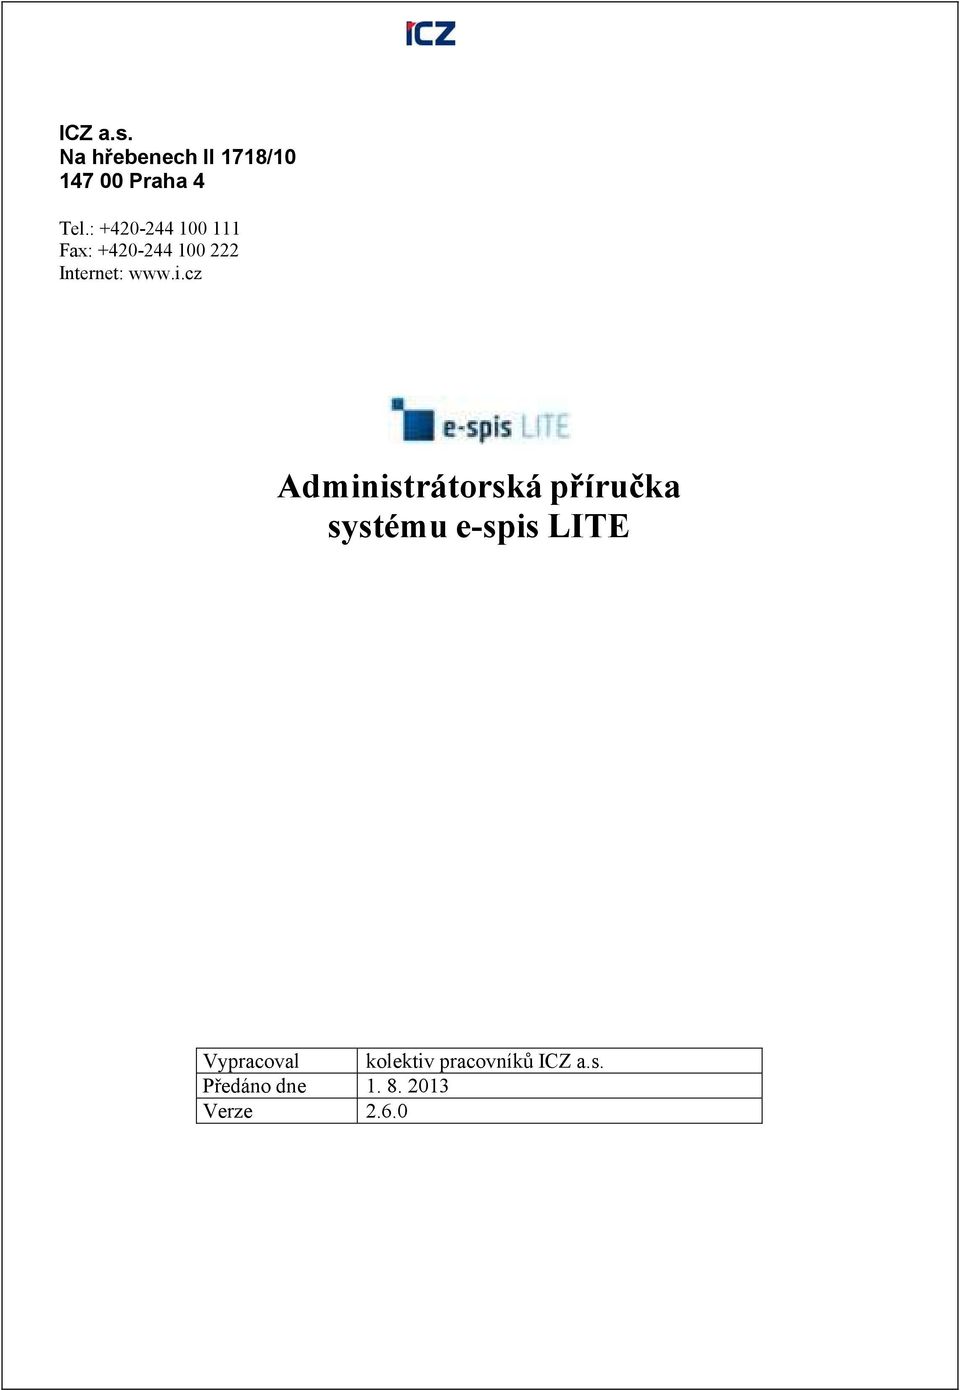 cz Administrátorská příručka systému e-spis LITE